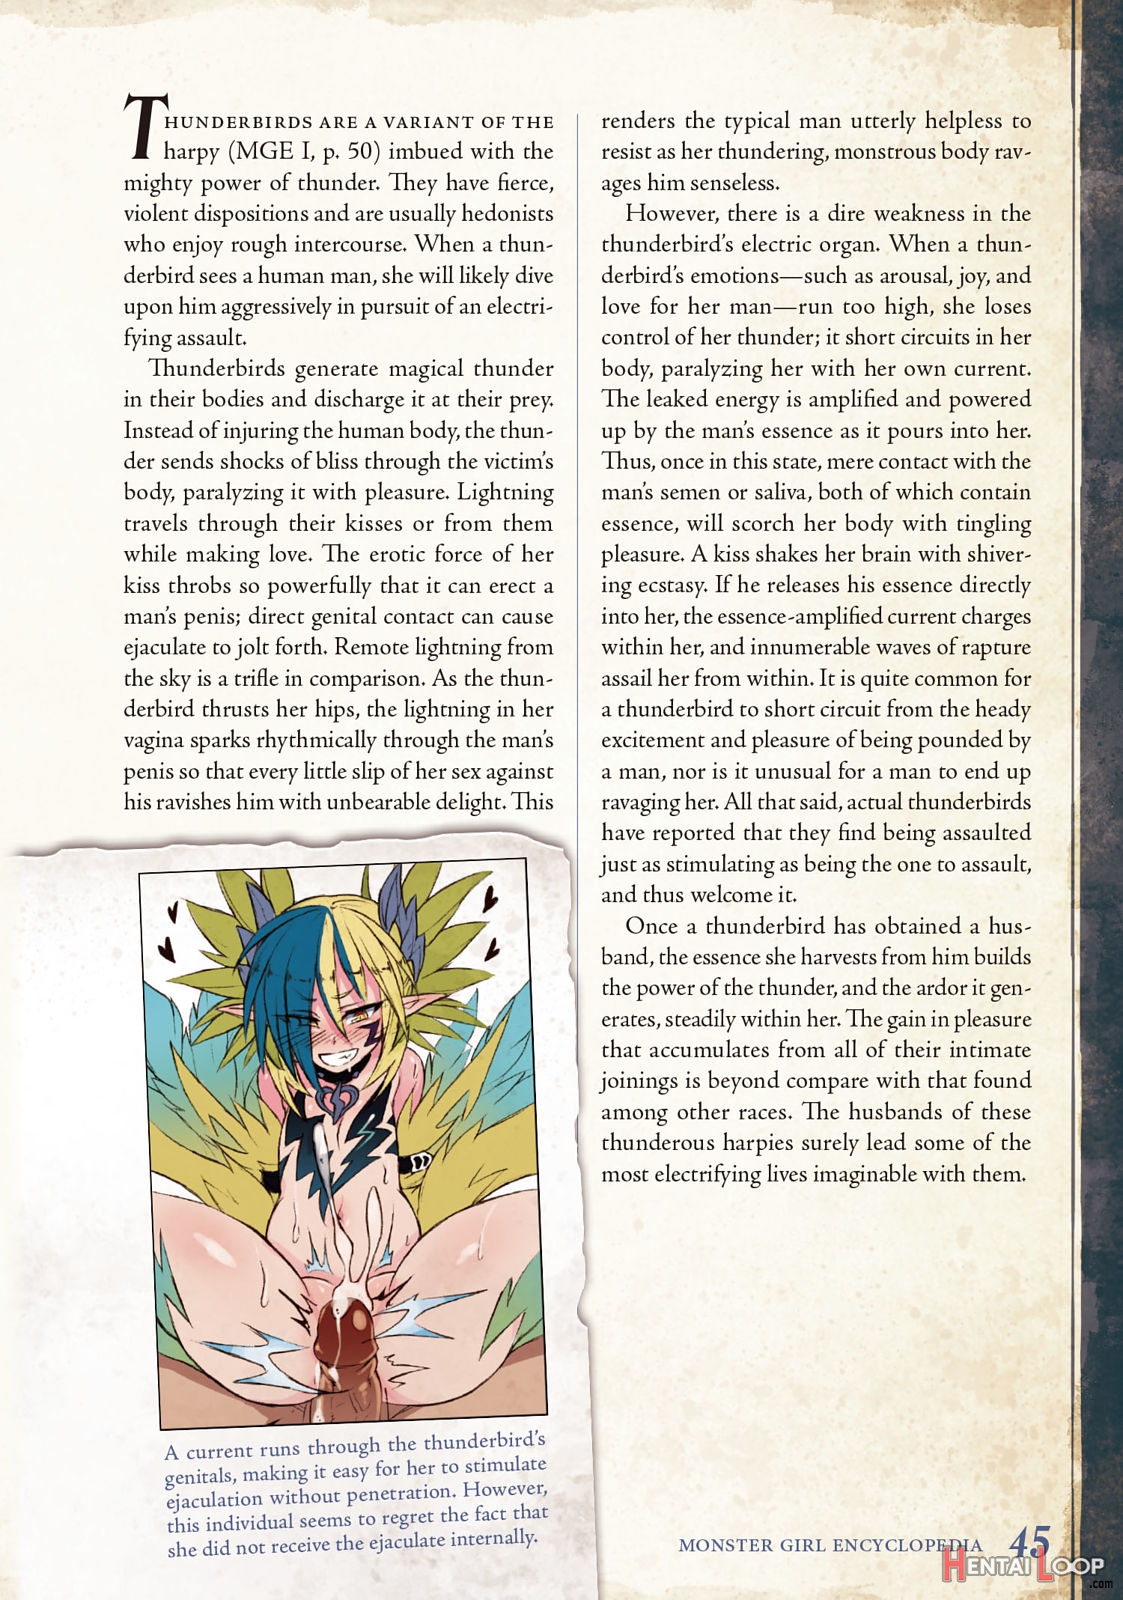 Monster Girl Encyclopedia Vol. 2 page 46